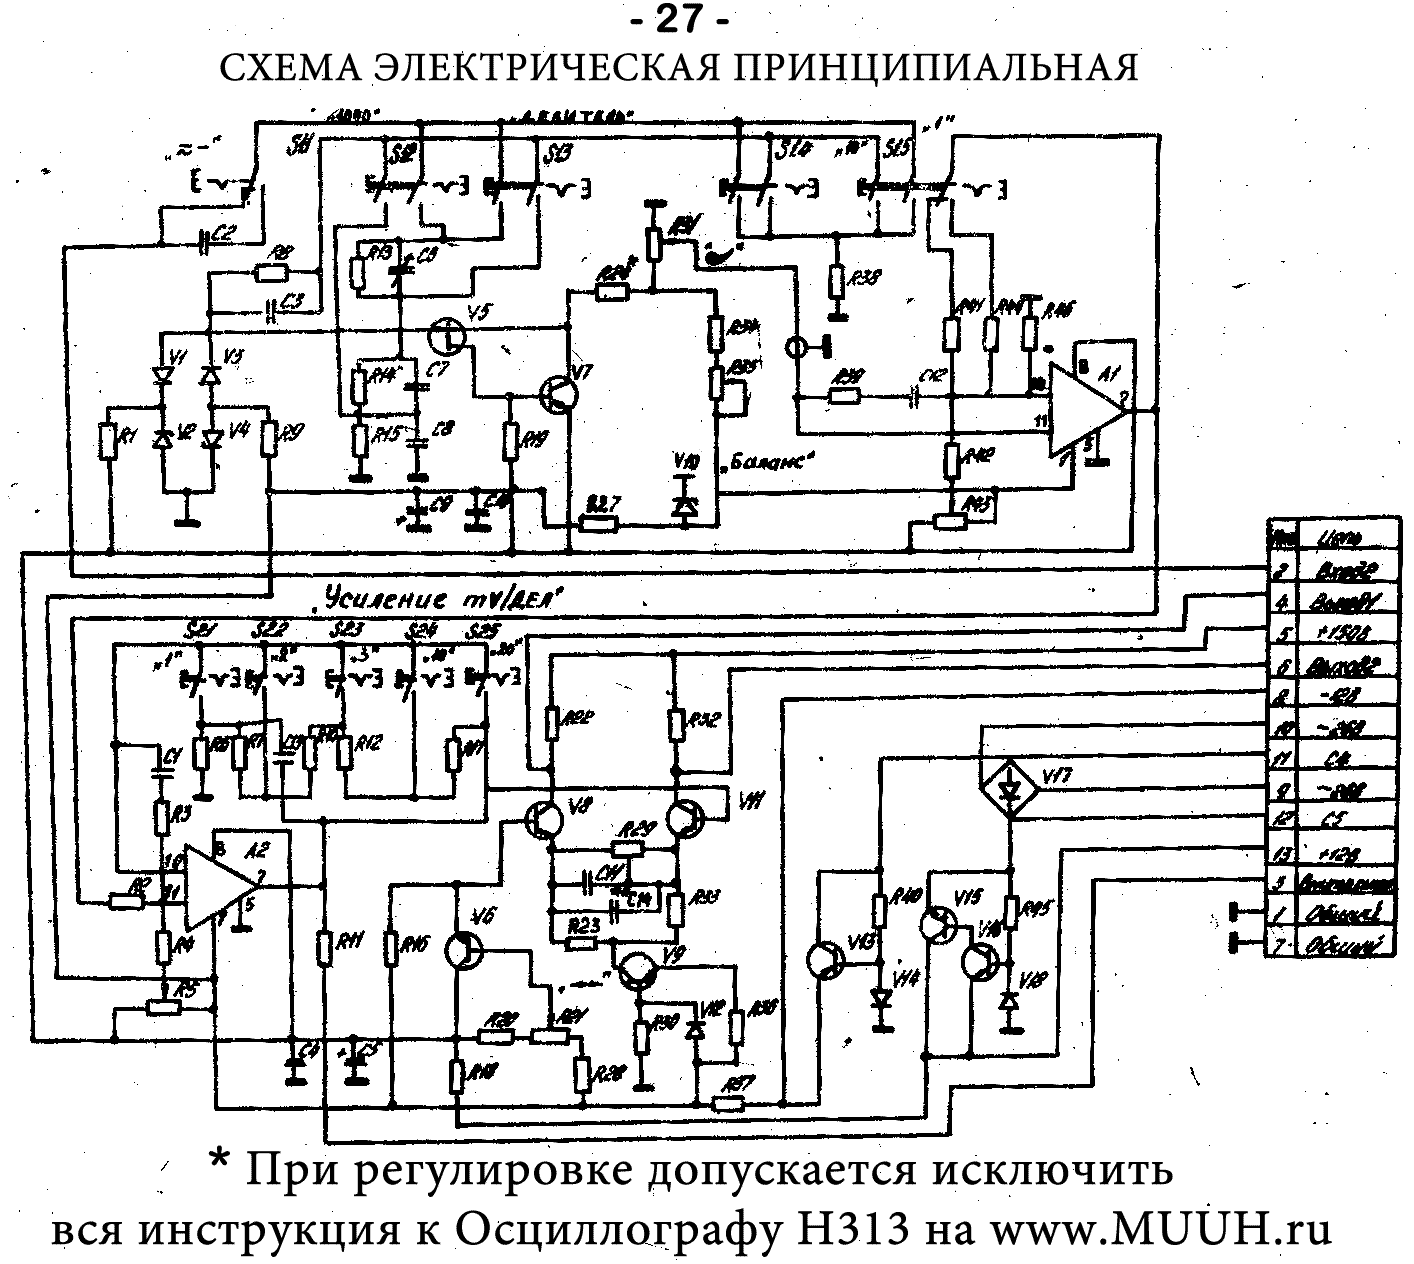 oscillograf n313 instrukciya prilogenie 3